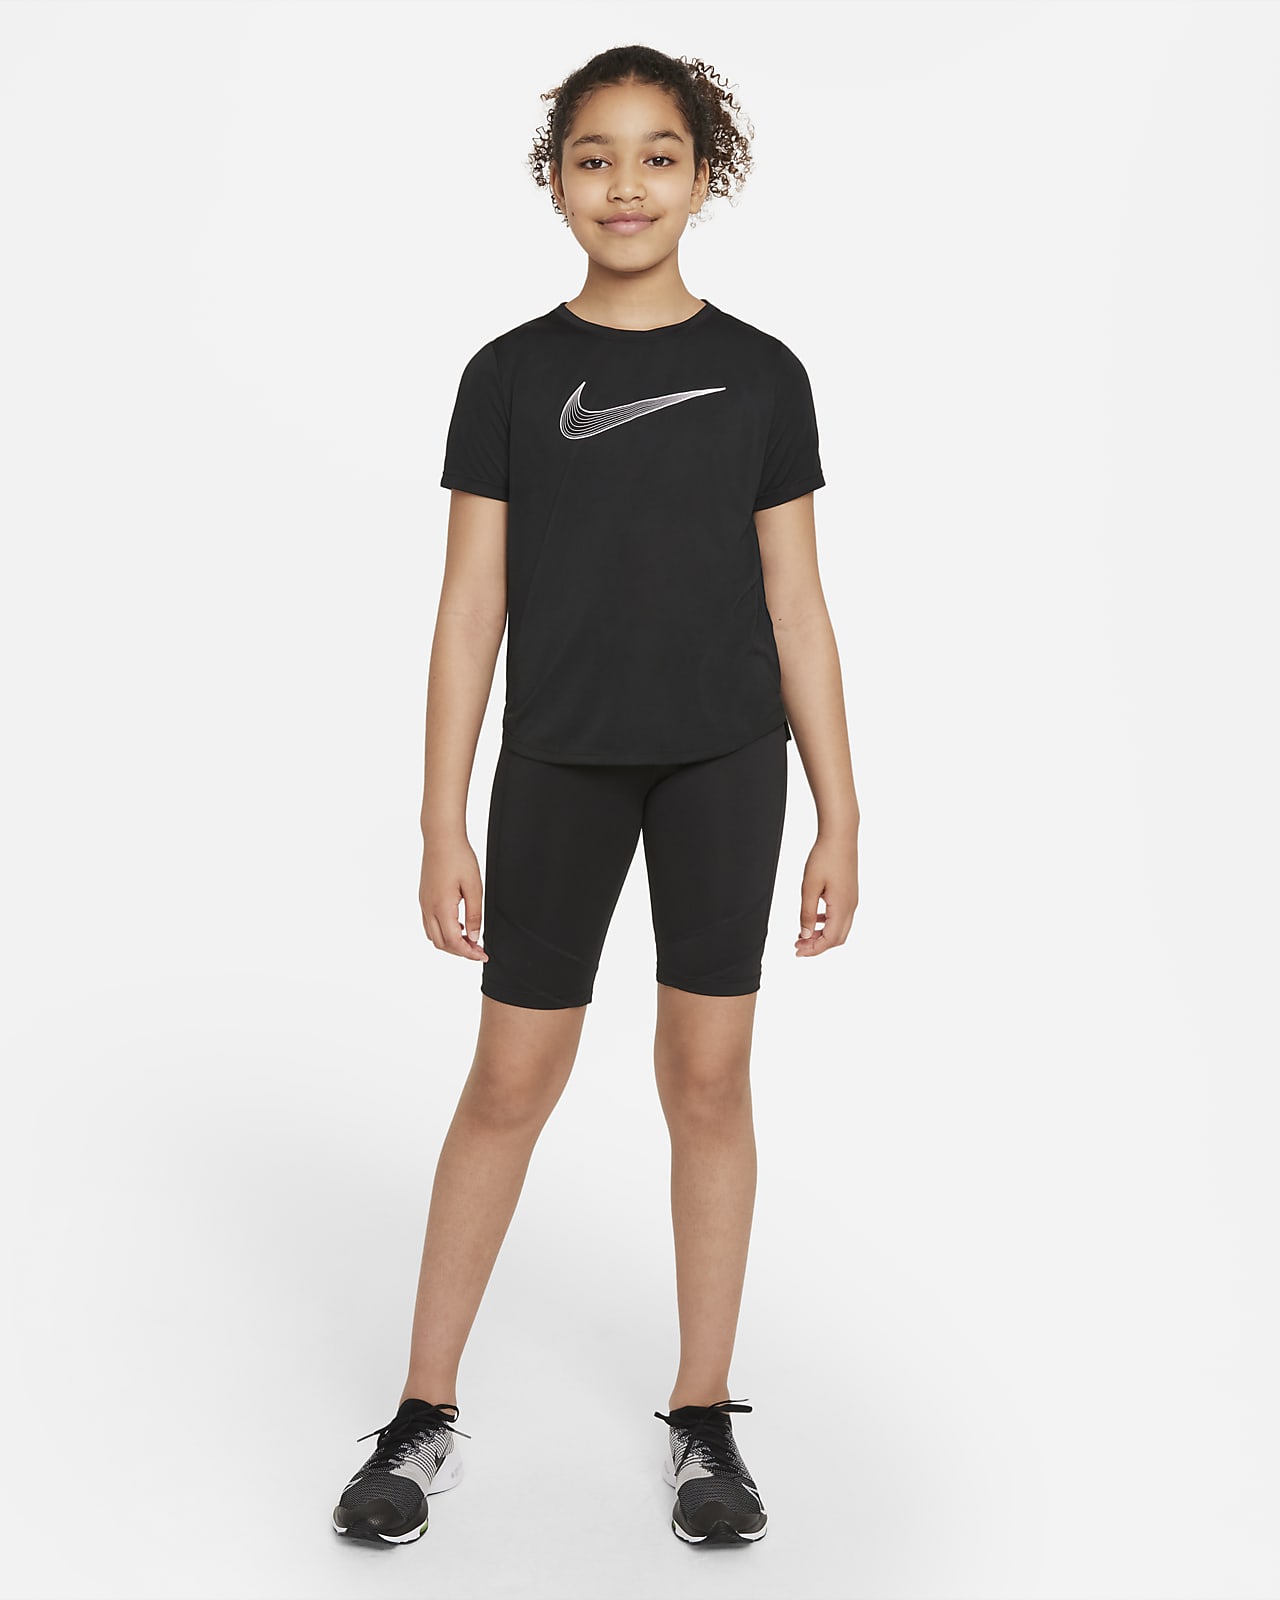 Nike, Shirts & Tops, Nike Drifit Big Girl Teen Size Xl Tween Shirt  Athletic Top Ruched